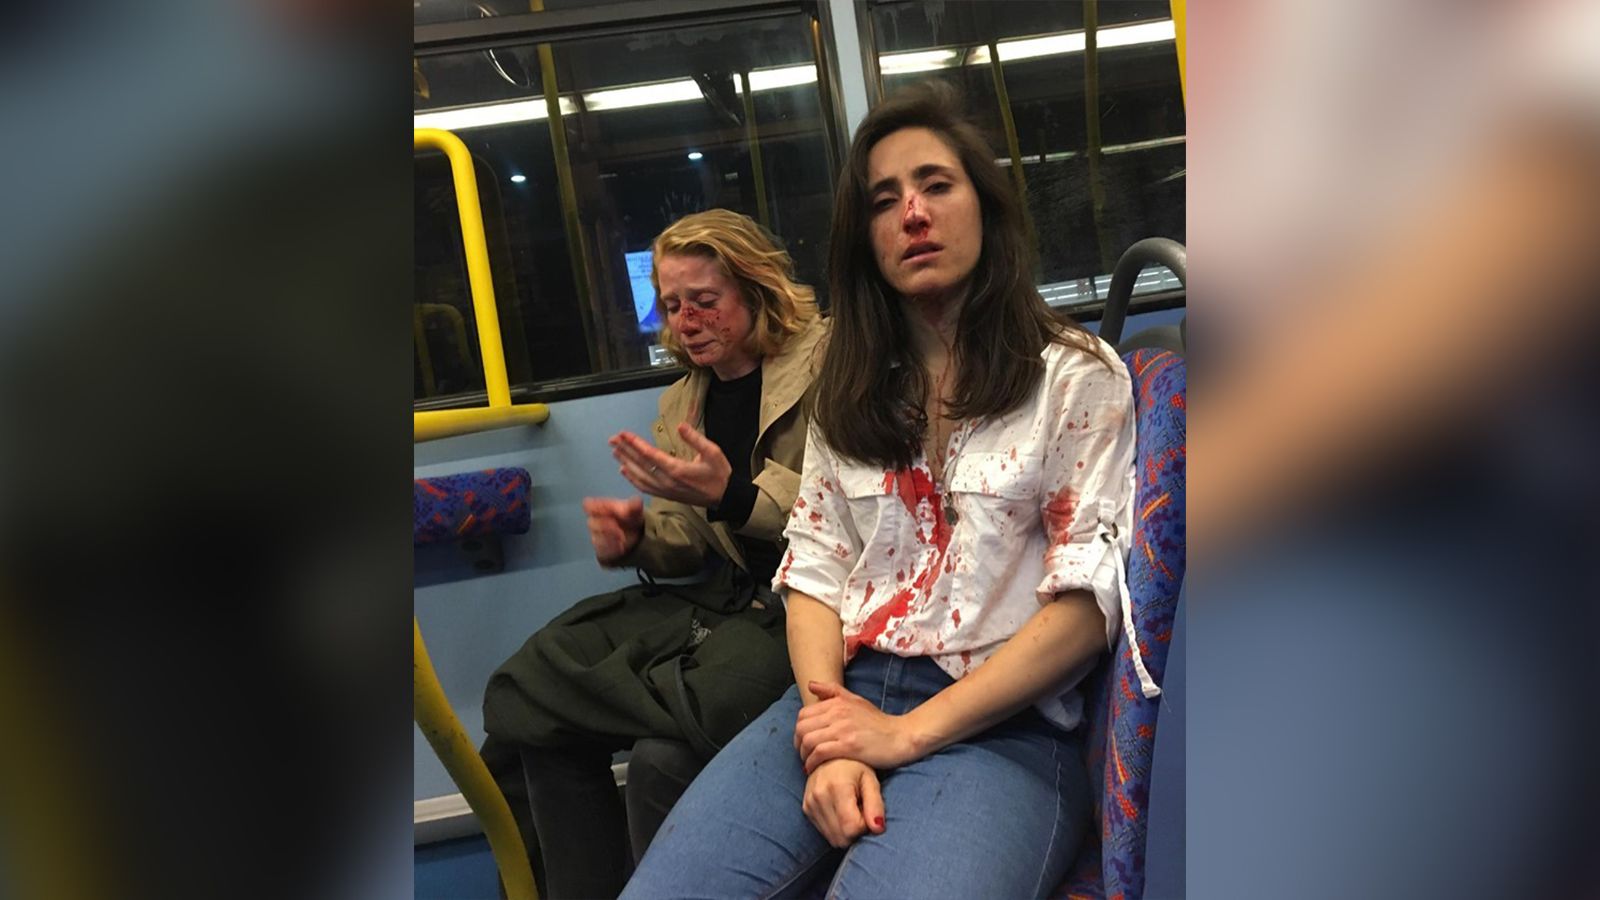 Daughter Sleepassault Videos - London bus attack: Lesbian couple viciously beaten in homophobic incident |  CNN